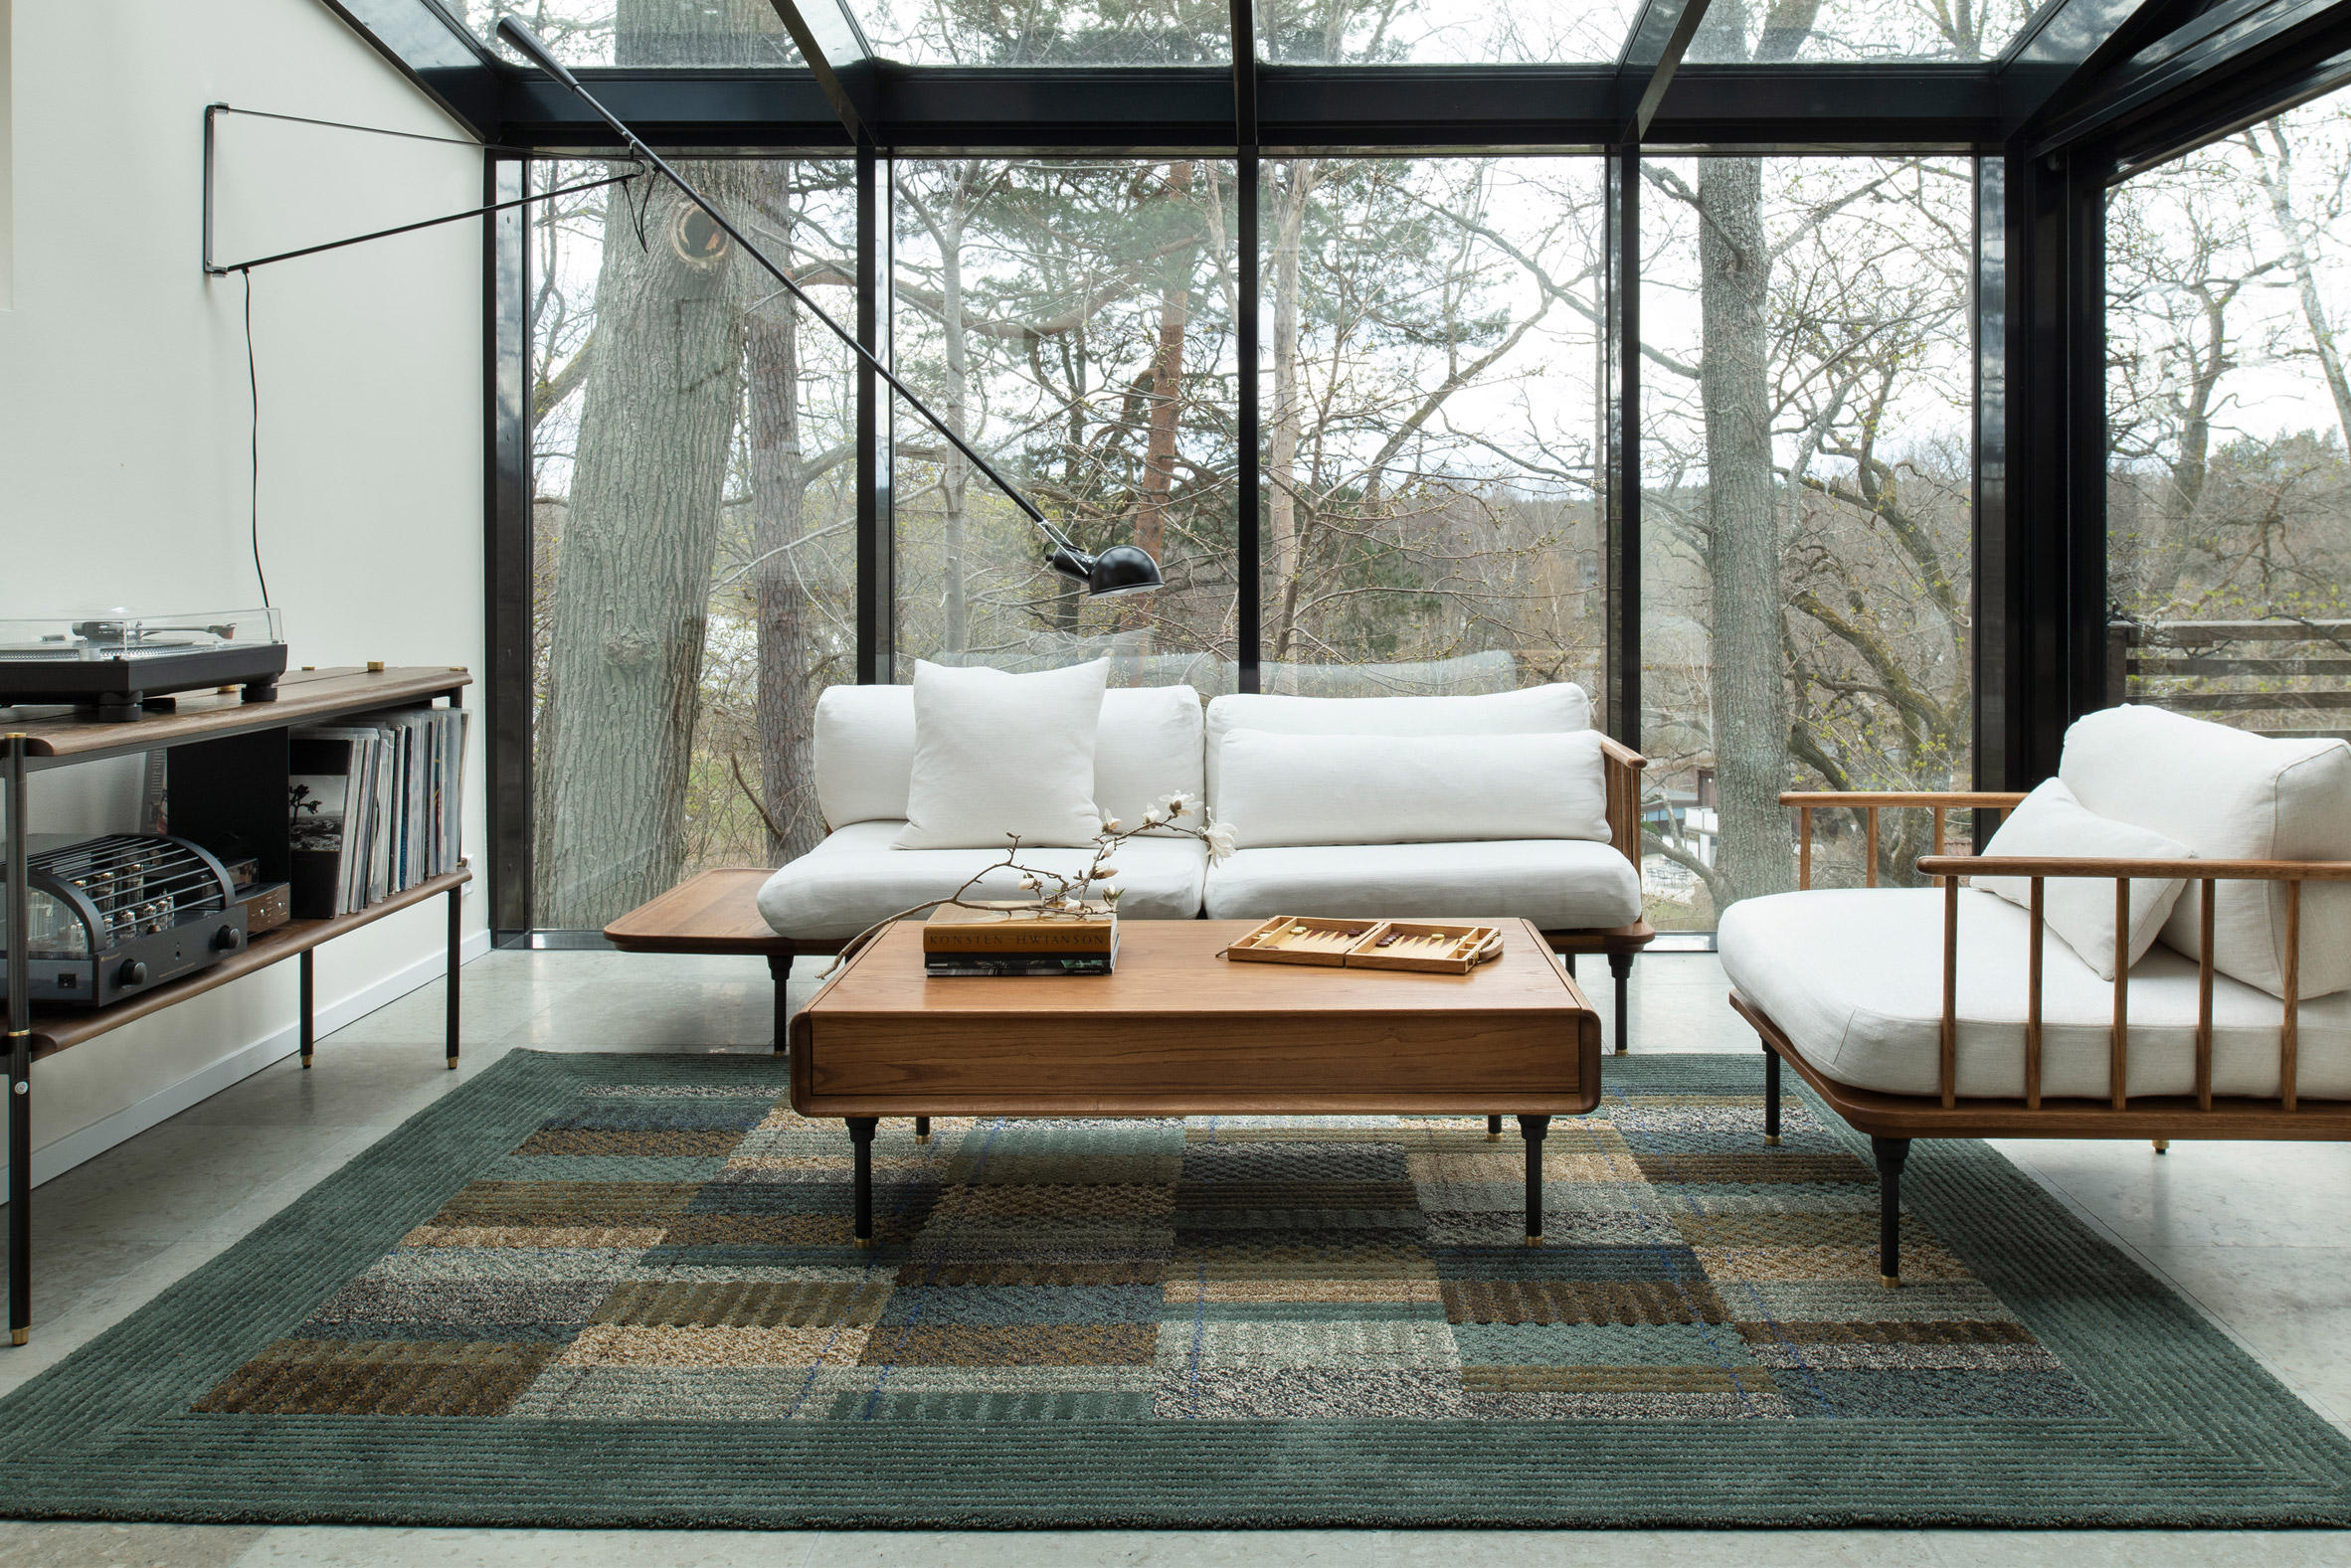 A living room with a geometric rug